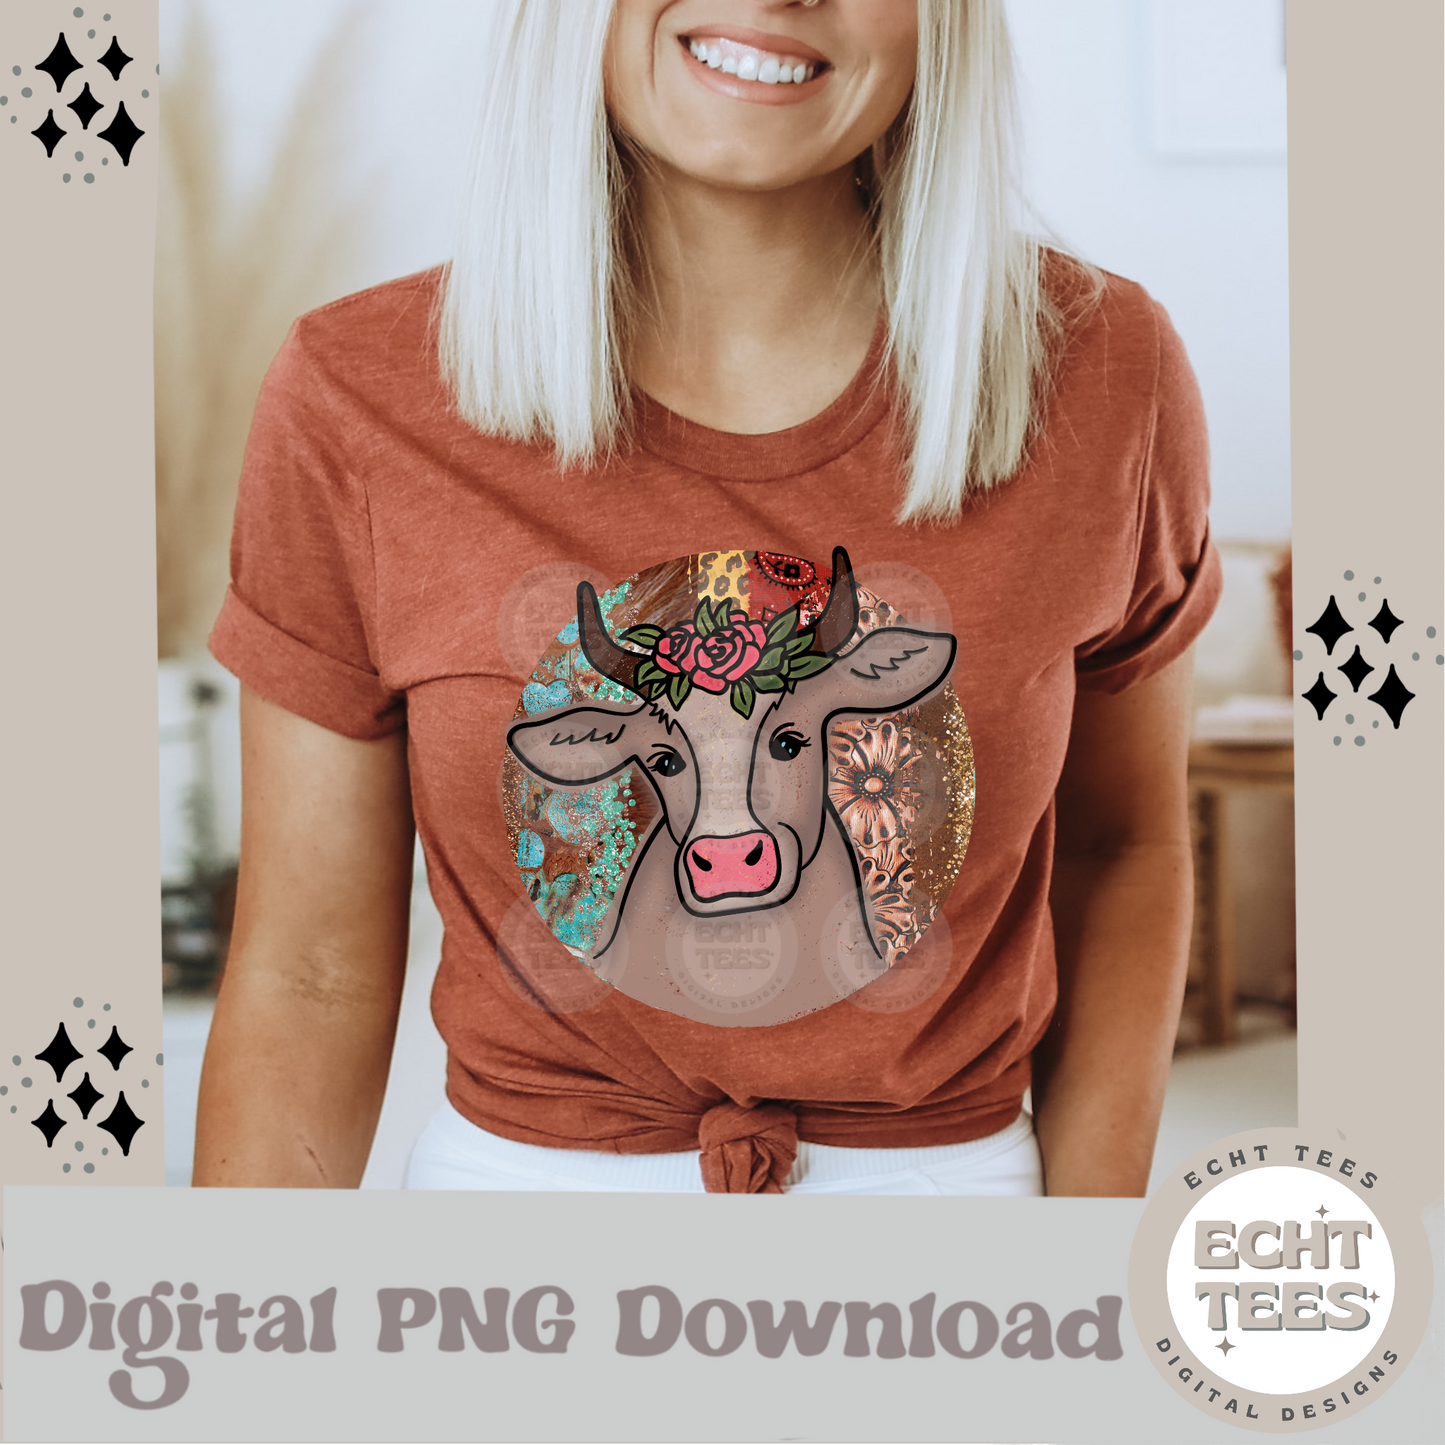 Cute Cow PNG Digital Download